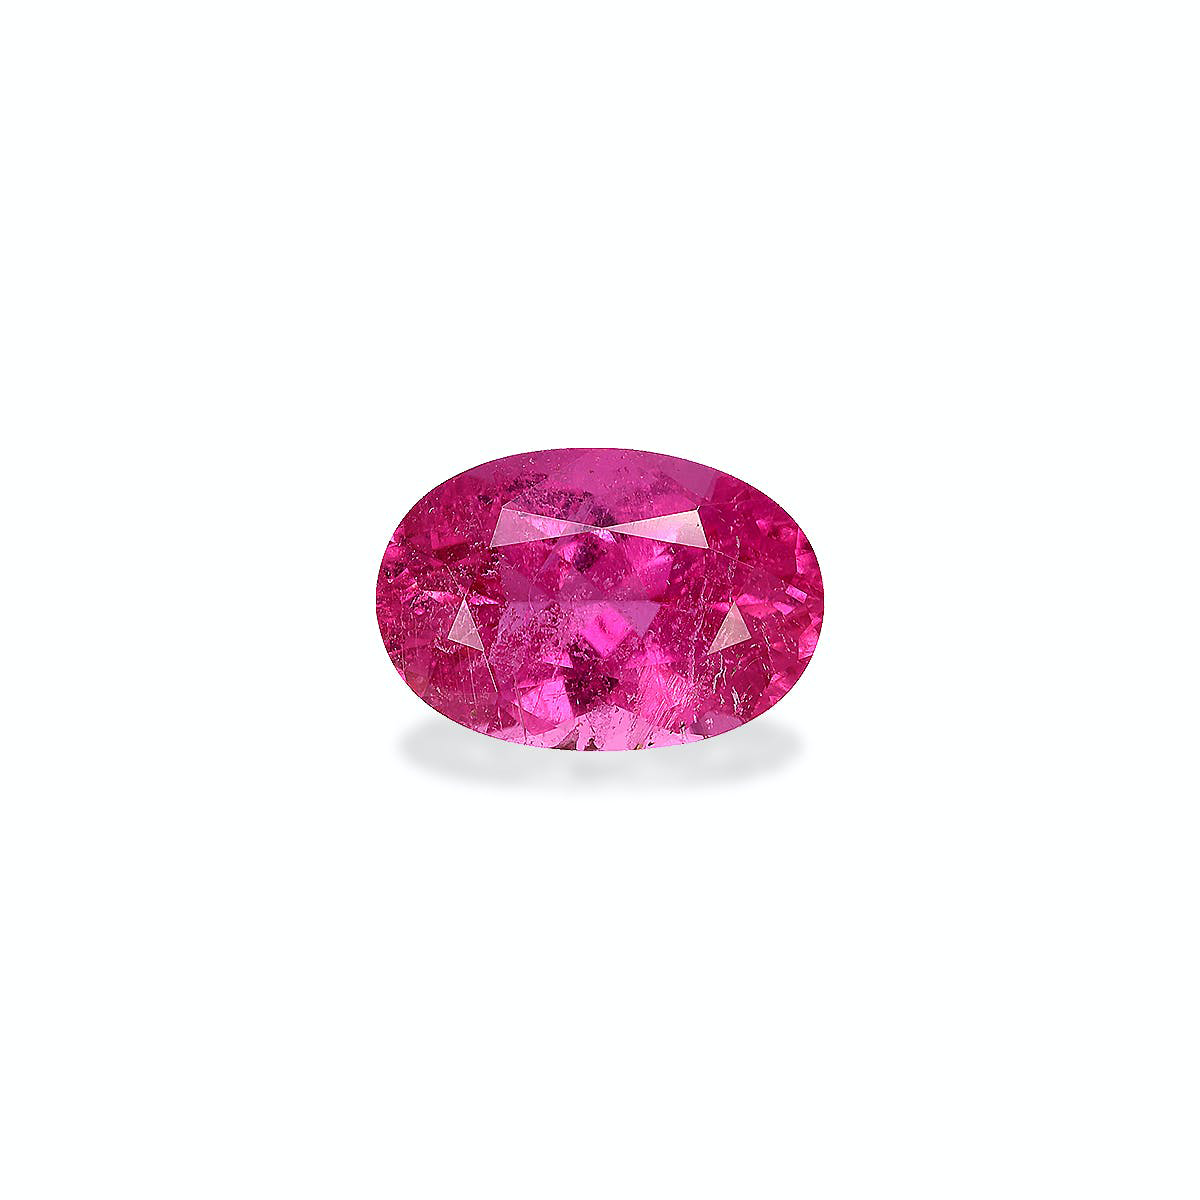 Picture of Vivid Pink Rubellite Tourmaline 2.48ct (RL1141)